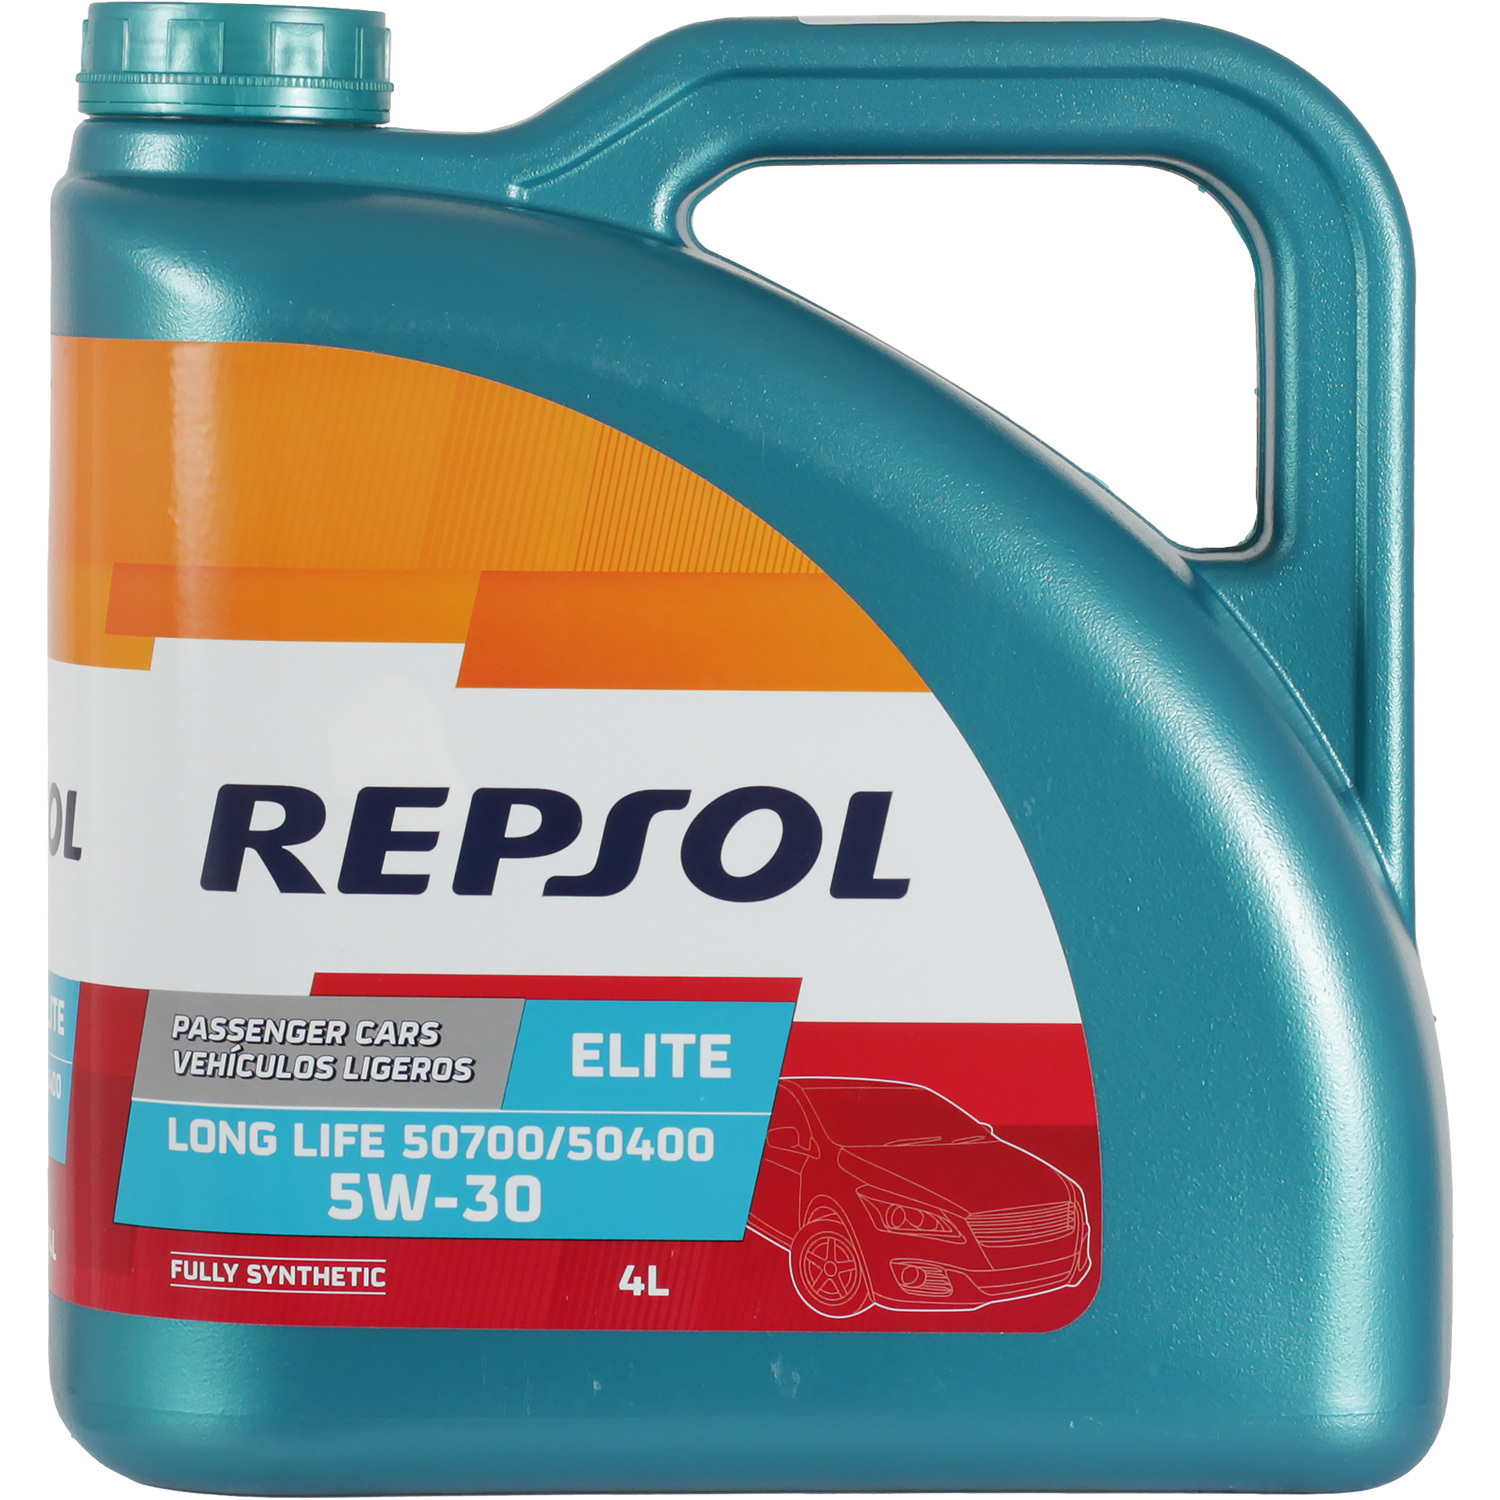 Repsol Масло моторное Repsol ELITE LONG LIFE 50700/50400 5W-30 4л repsol моторное масло repsol elite long life 50700 50400 5w 30 1 л